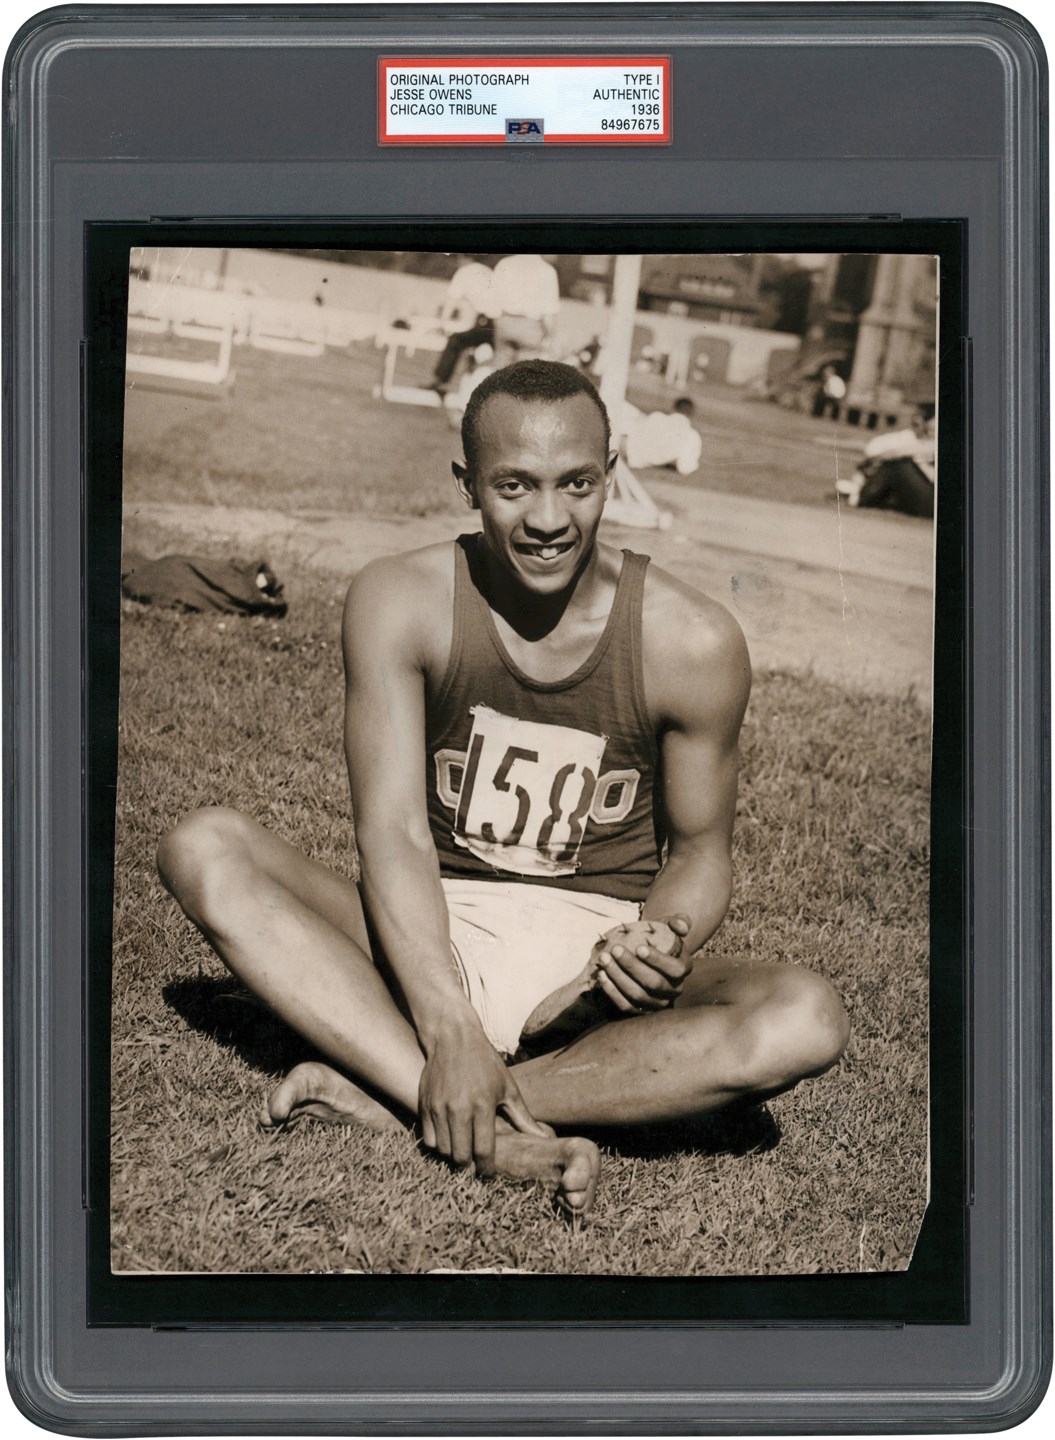 Vintage Sports Photographs - Circa 1936 Jesse Owens Photograph - Gold Medal Olympic Era (PSA Type I)